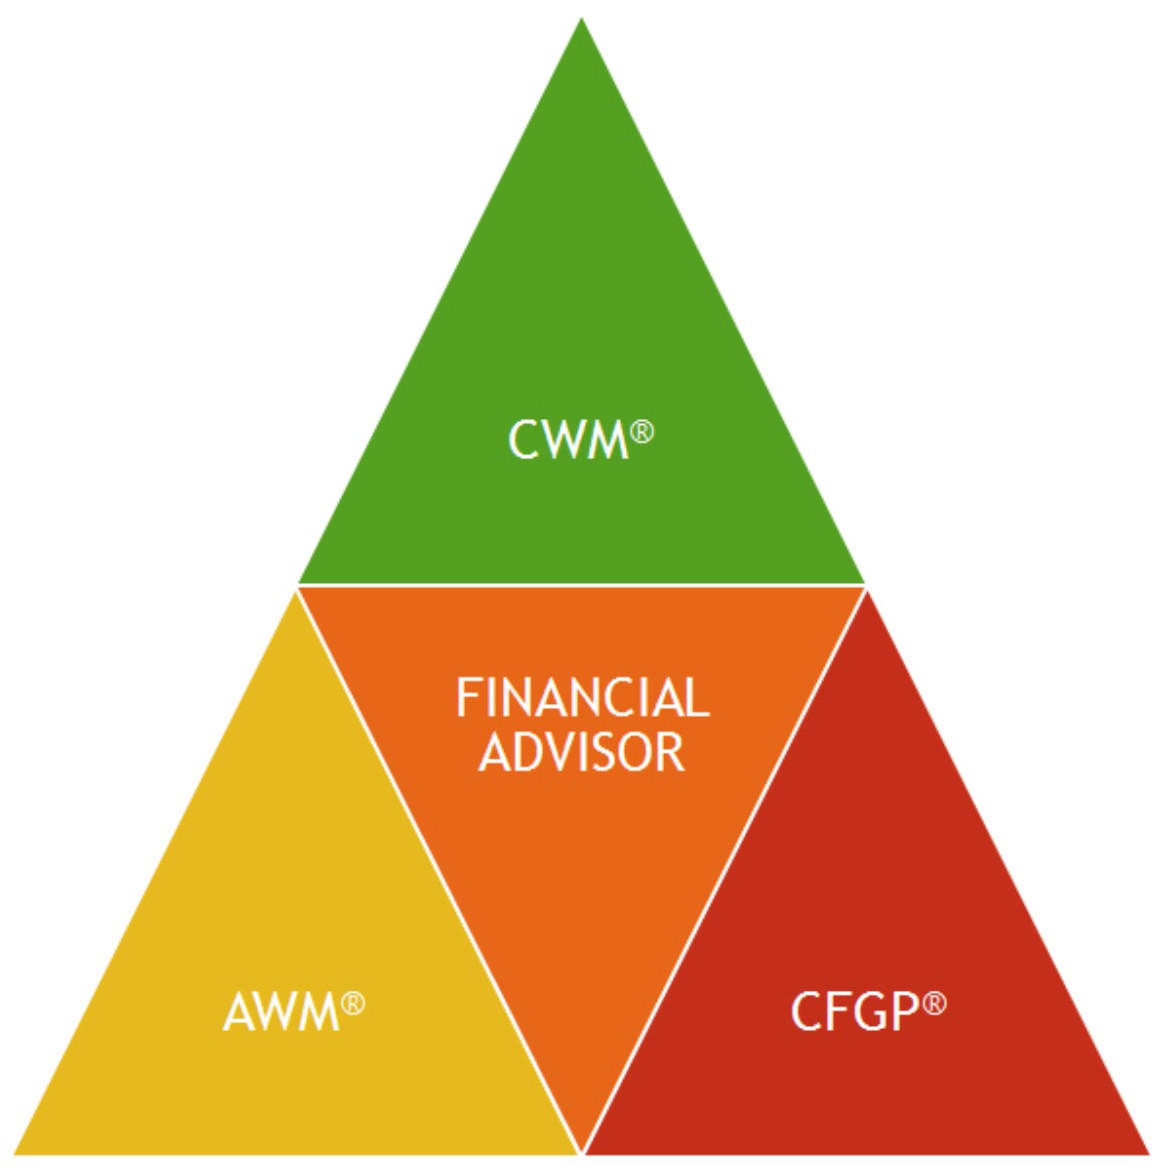 CFGP Financial advisor pyramid